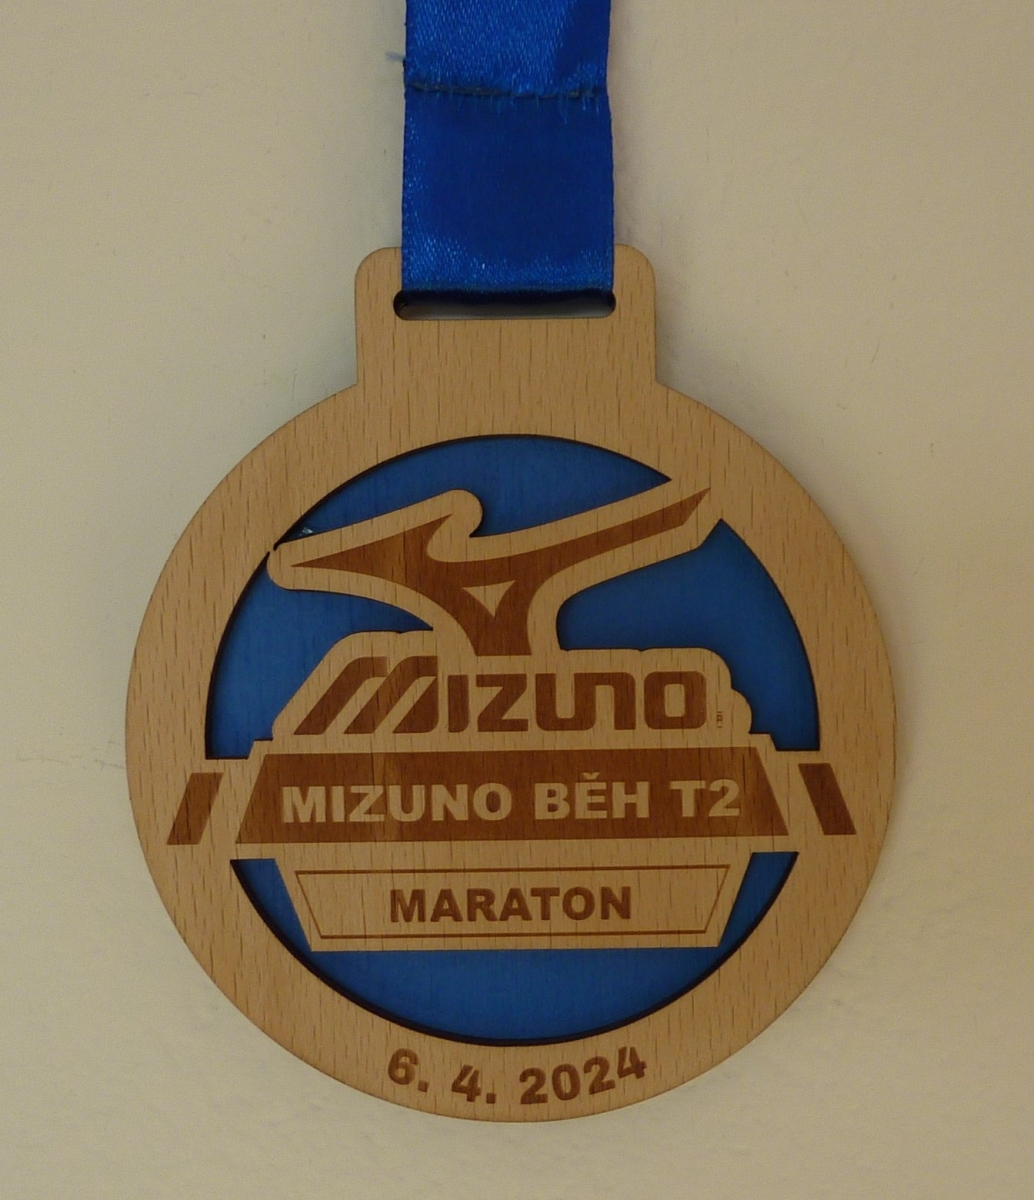 Budějovice Marathon 2024: Medaille aus Holz